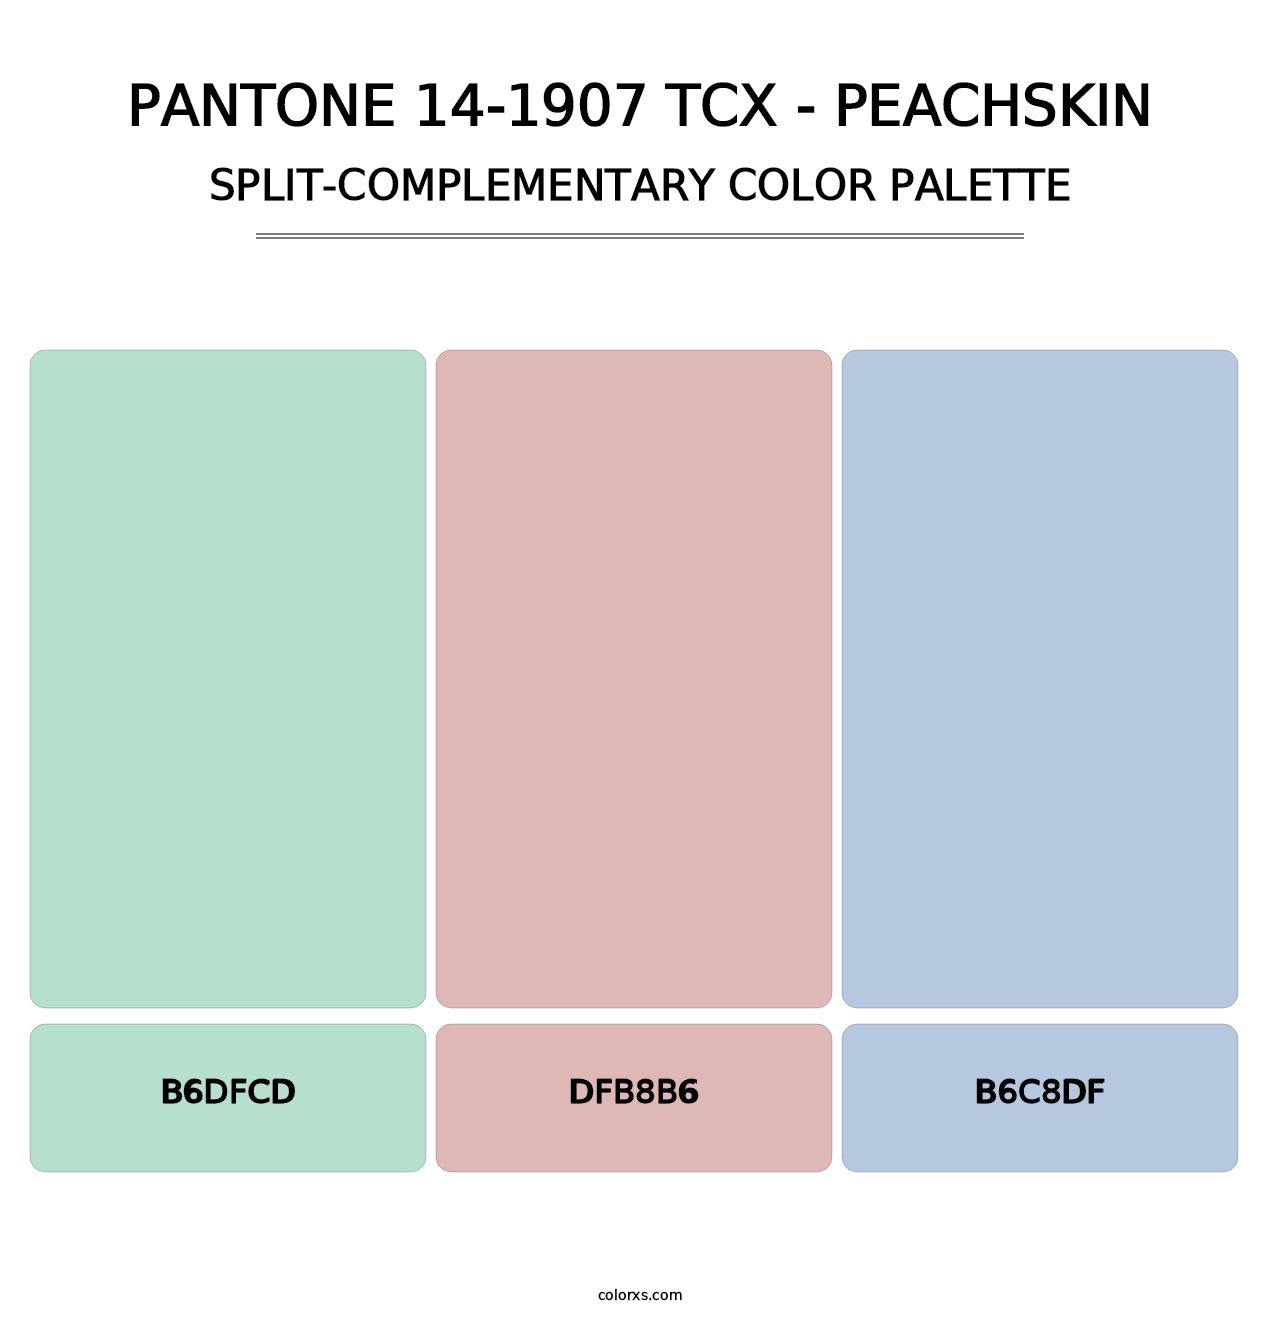 PANTONE 14-1907 TCX - Peachskin - Split-Complementary Color Palette